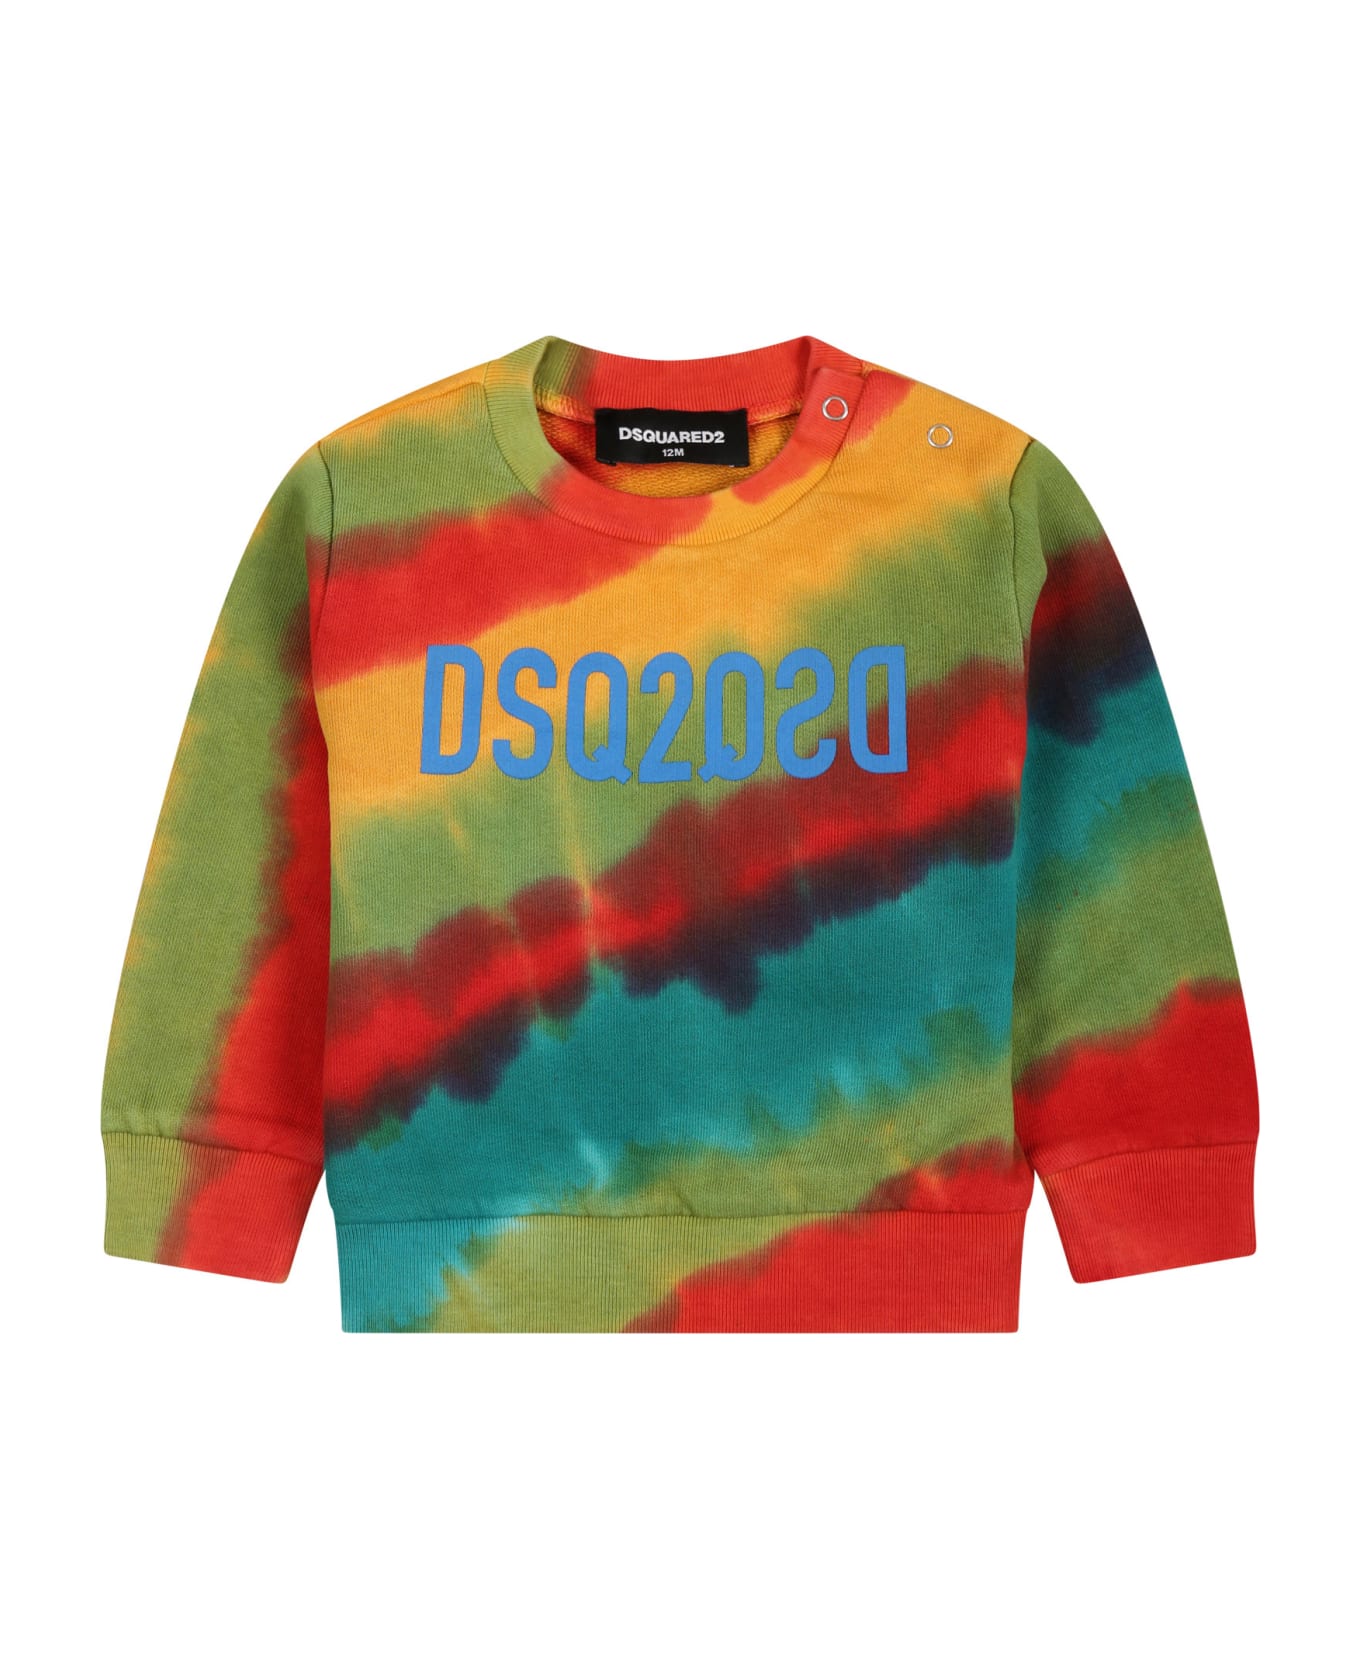 Dsquared2 Multicolor Sweatshirt For Baby Boy With Logo - Multicolor